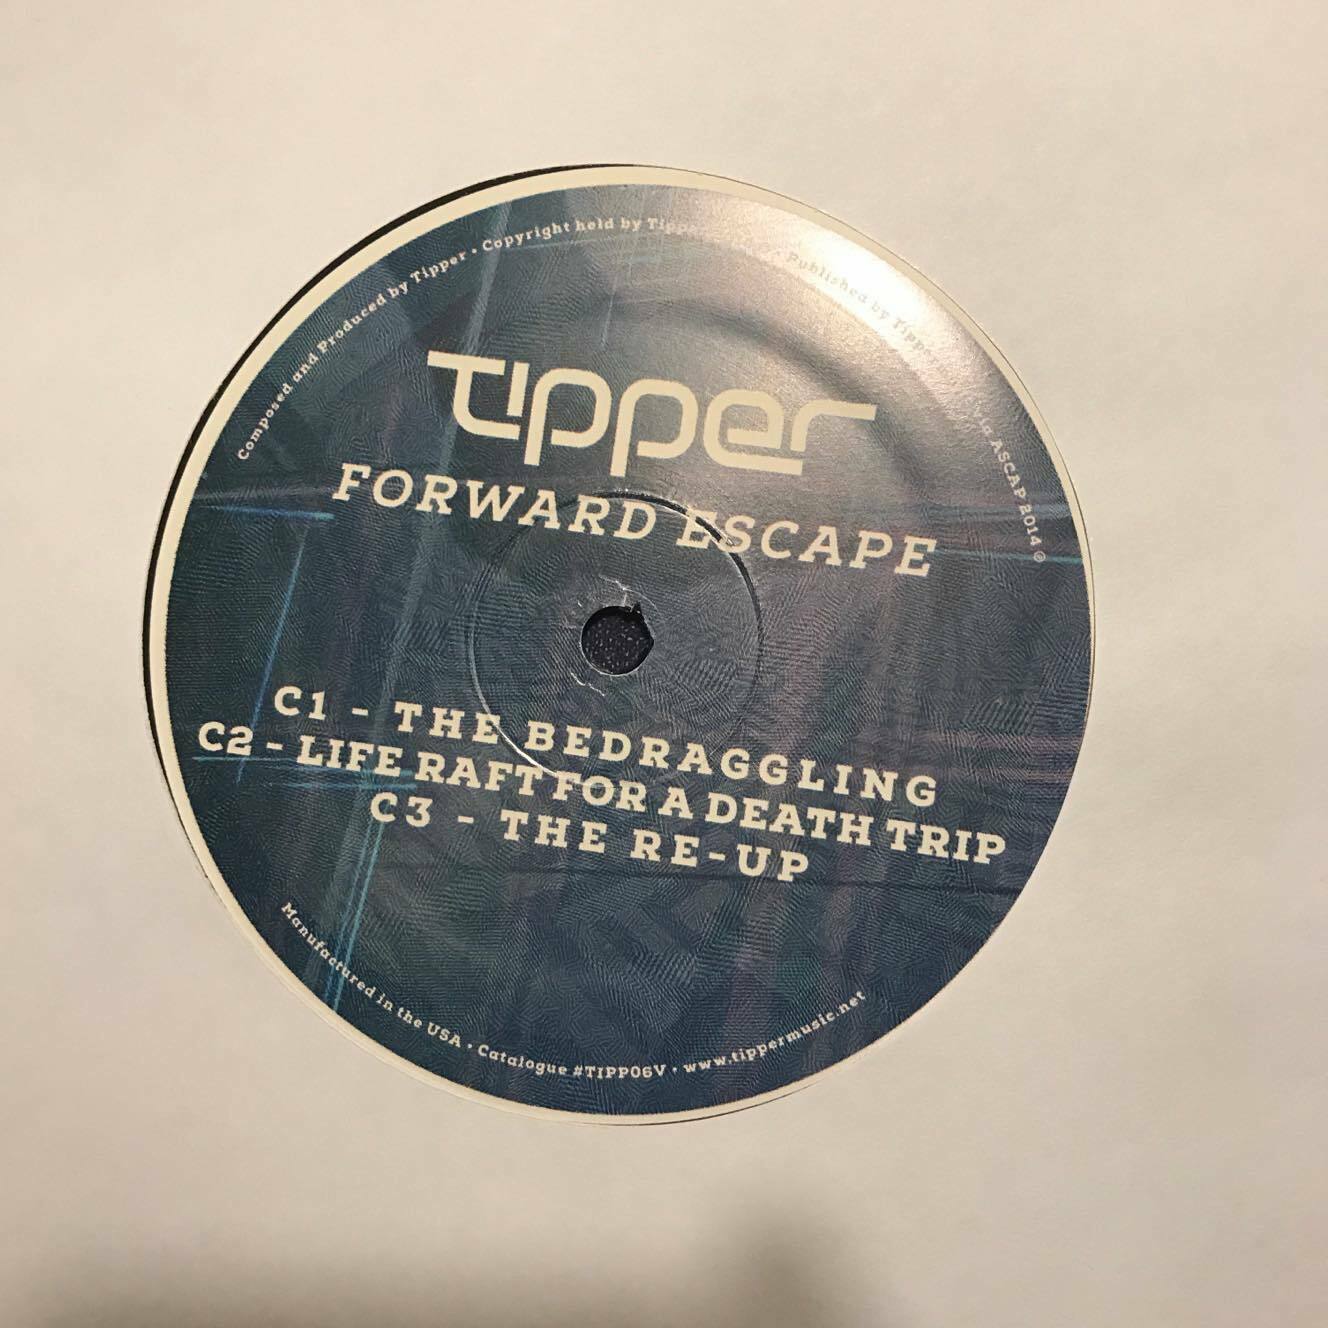 Pic 3 Tipper - 'Forward Escape' Vinyl LP Limited Edition